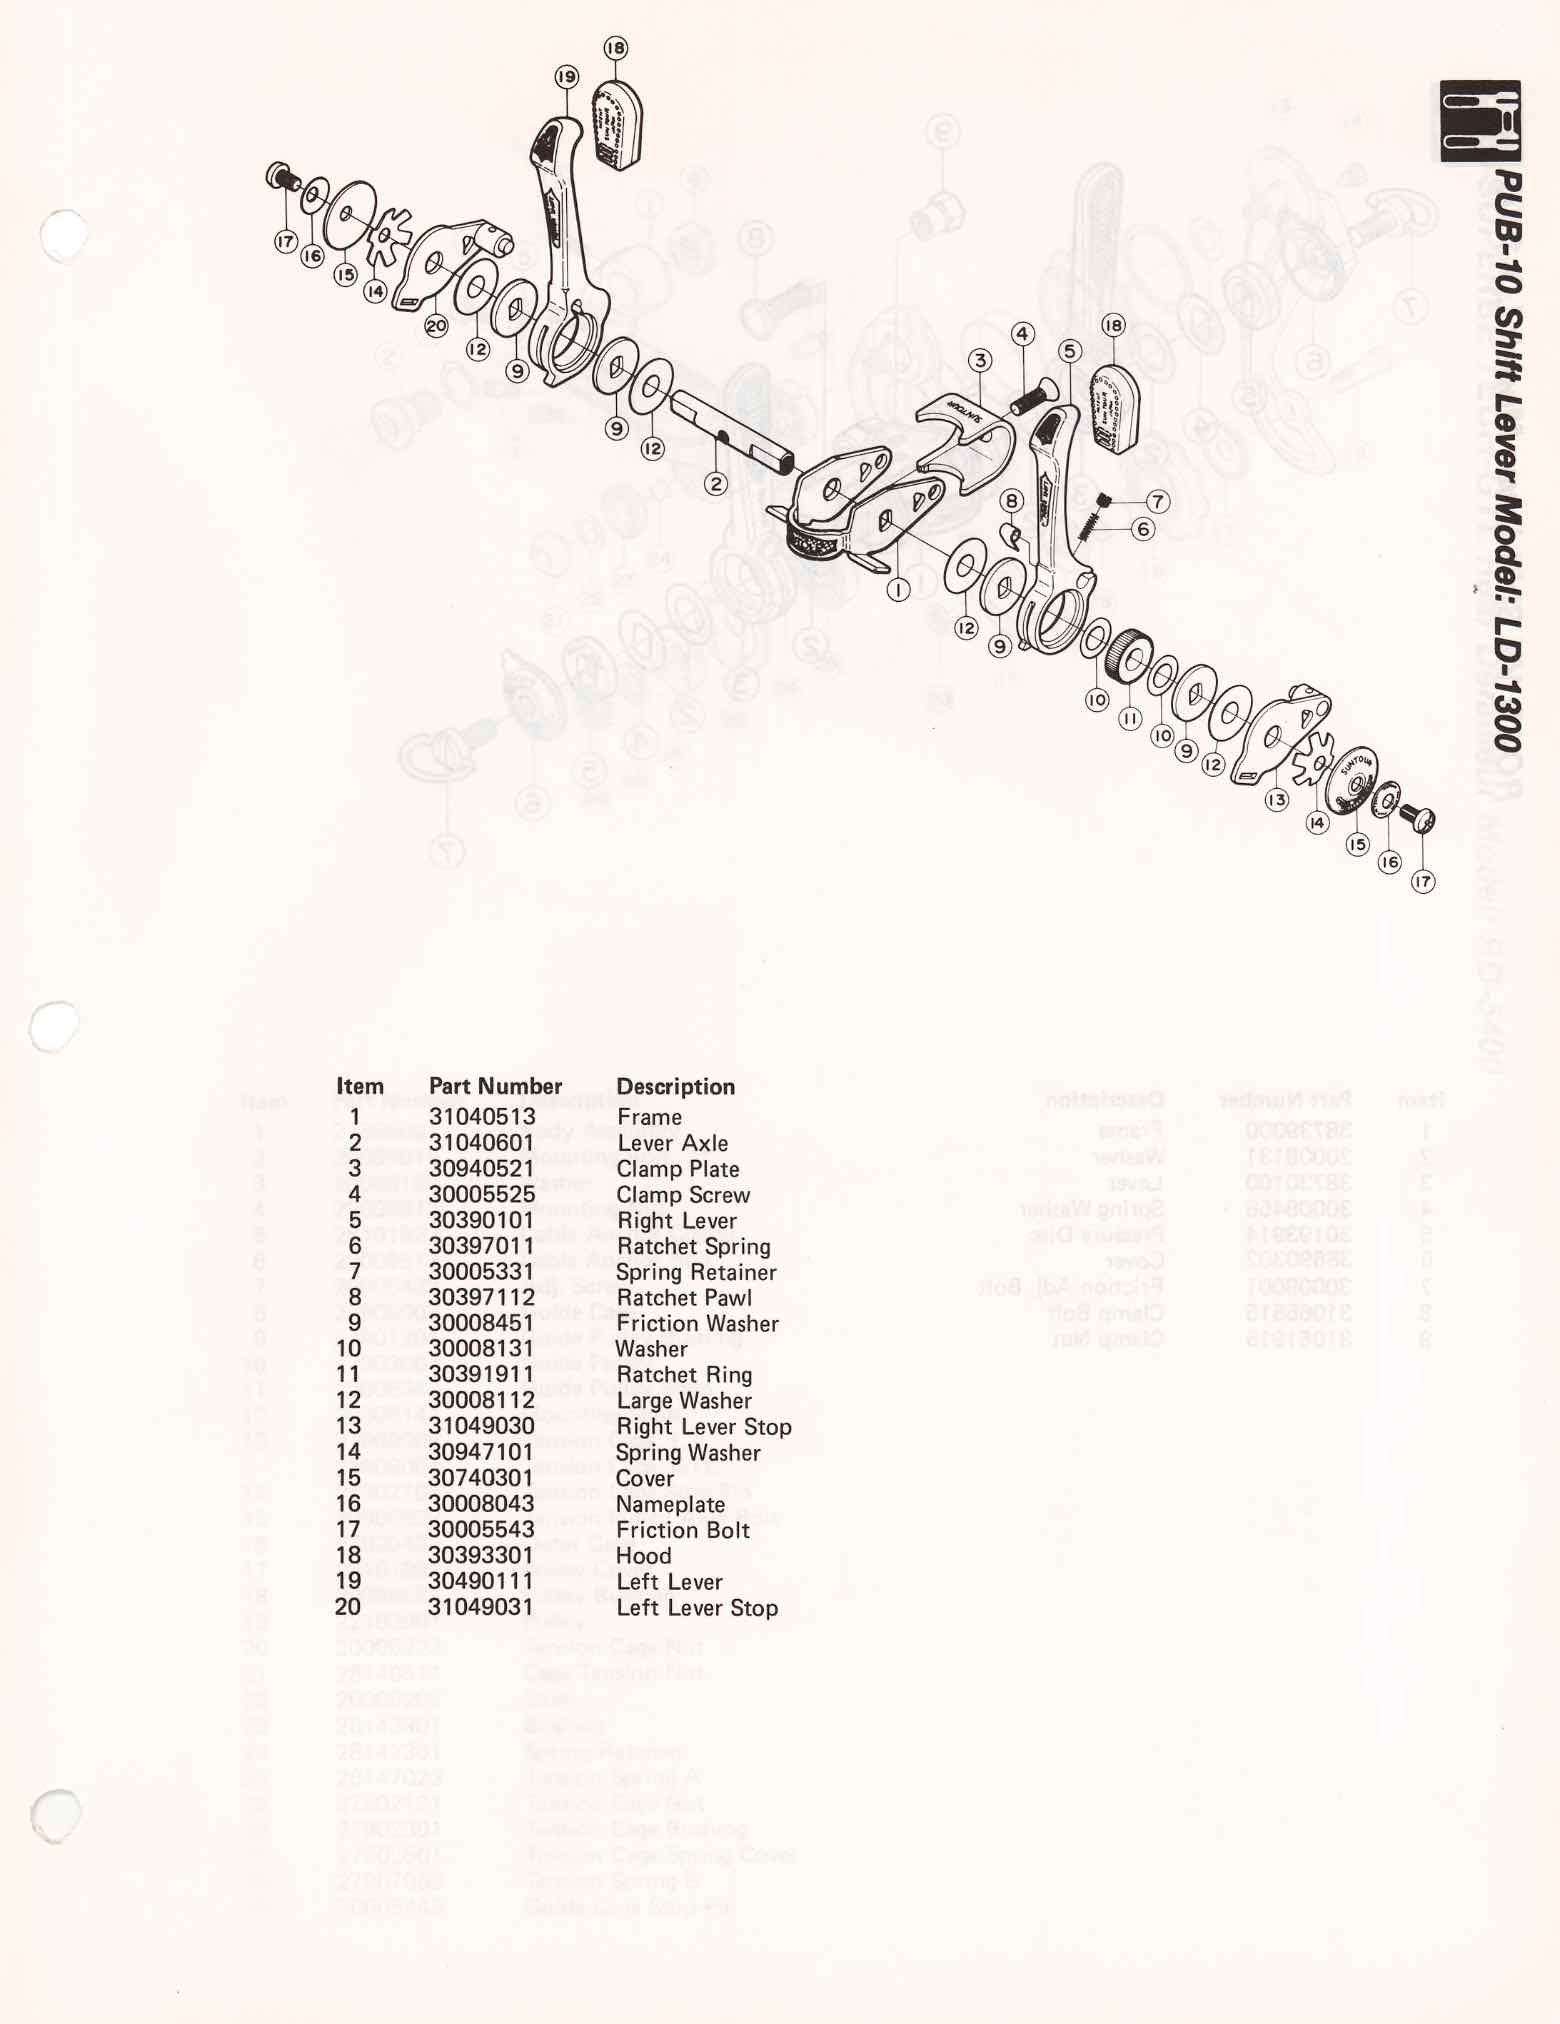 SunTour Small Parts Catalog - 1983? scan 32 main image